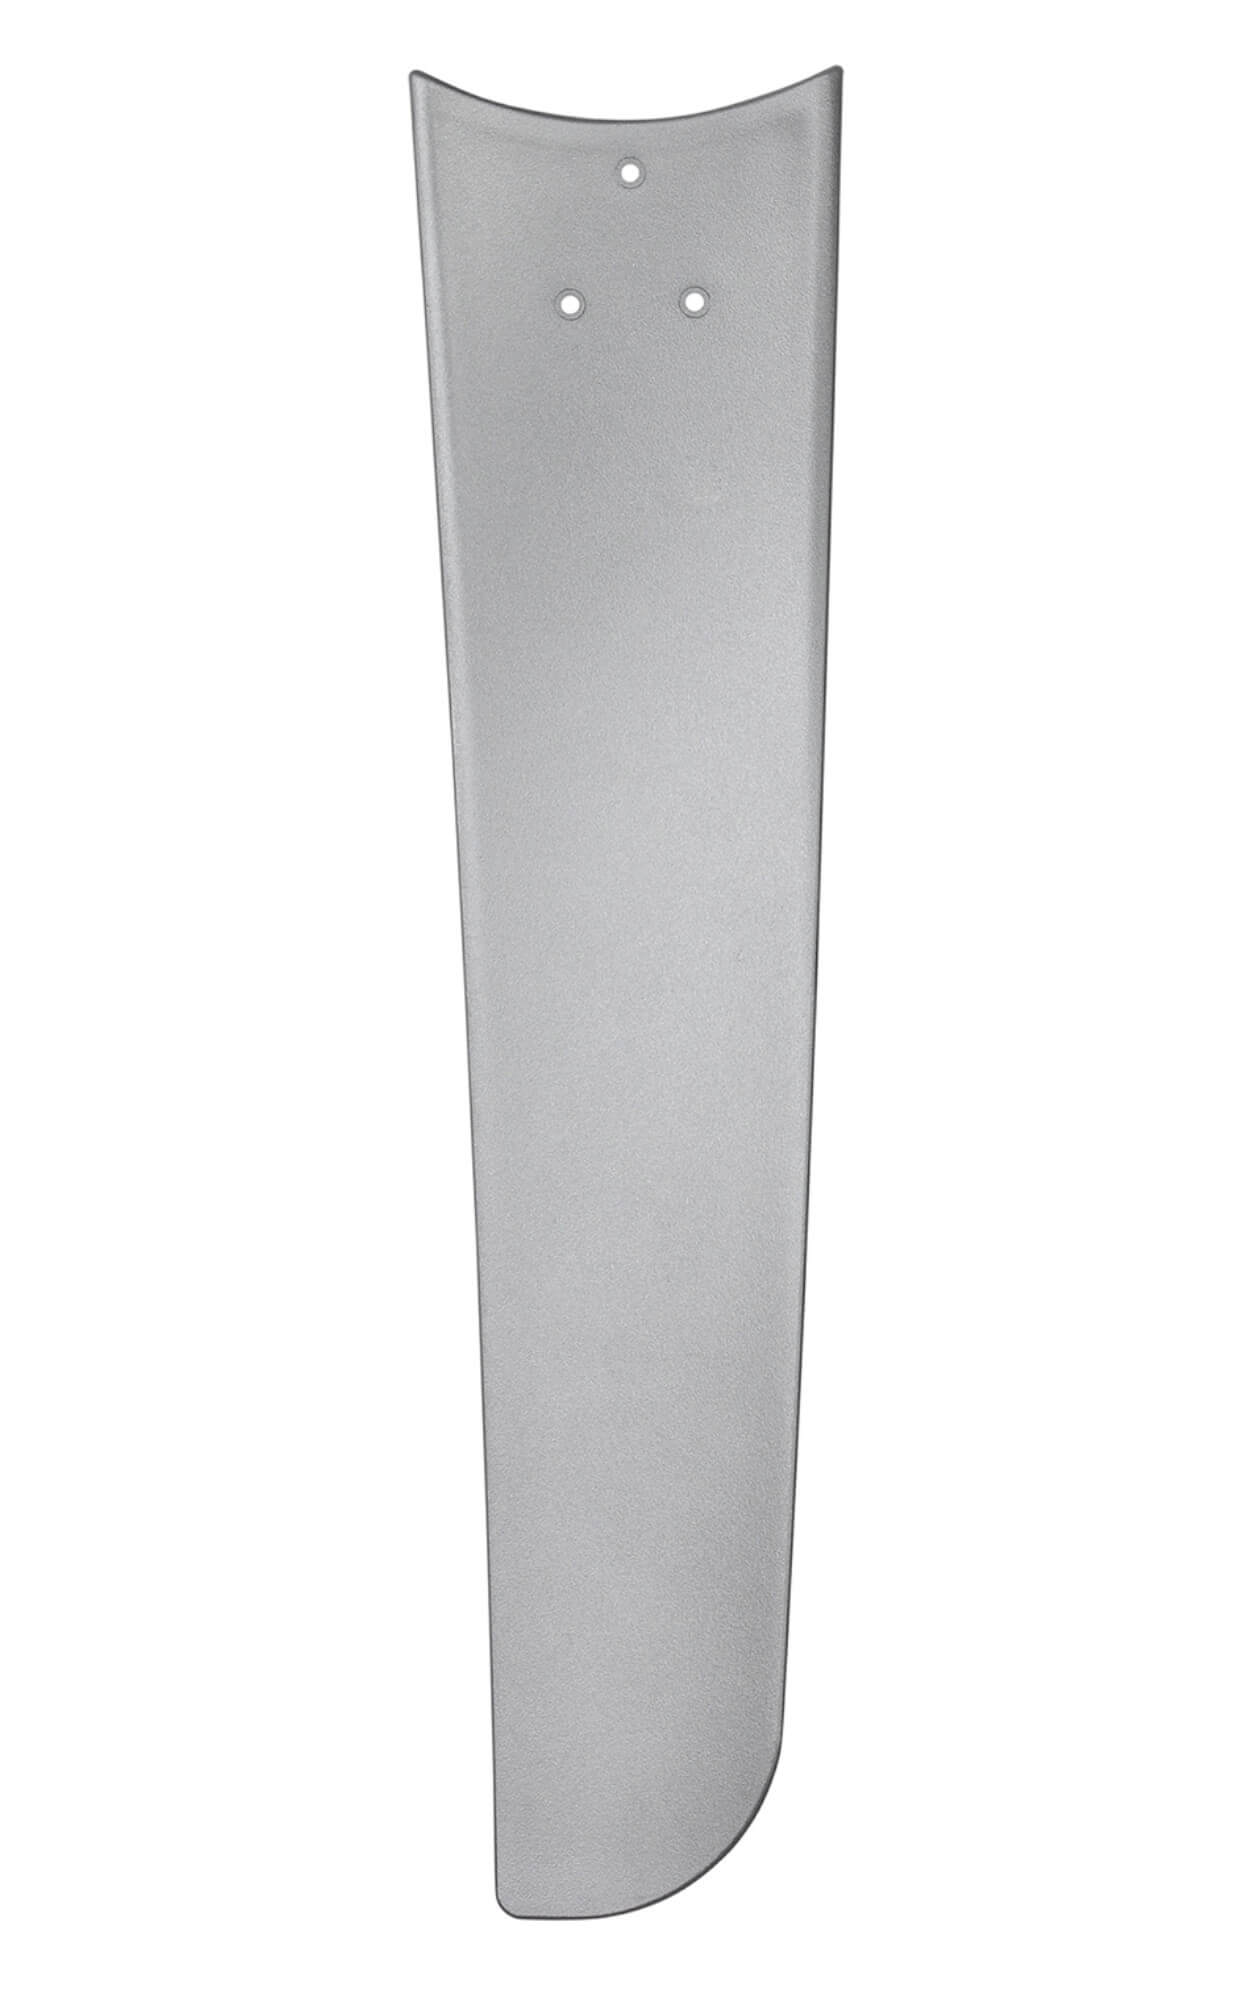 CASAFAN Mirage / Deckenventilator (62 Silber Watt) Grau